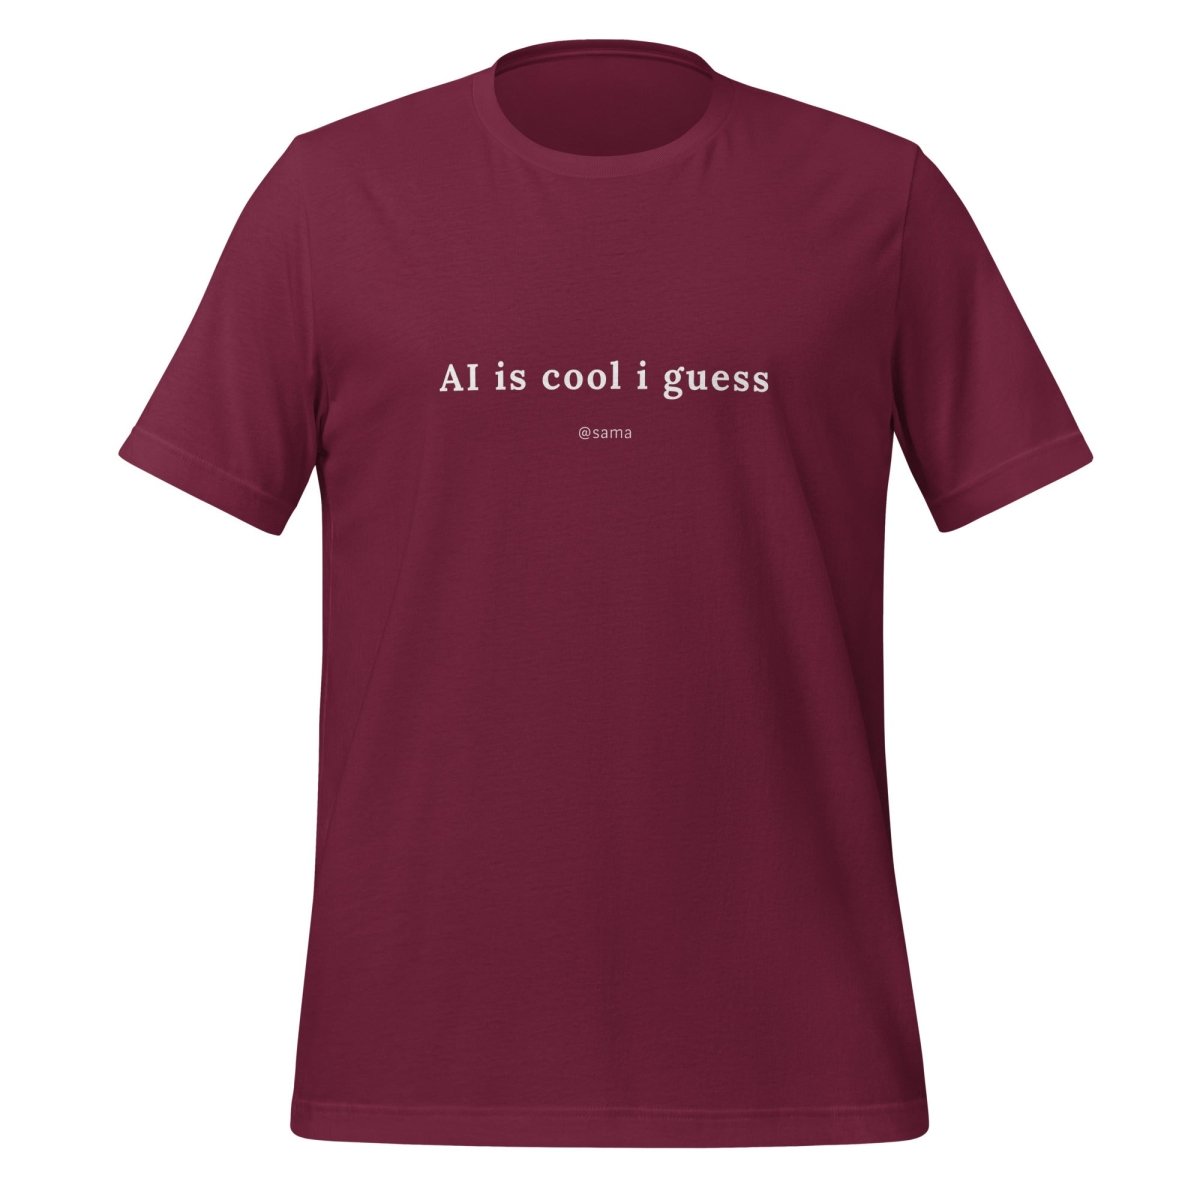 AI is cool i guess [@sama] T - Shirt (unisex) - Maroon - AI Store